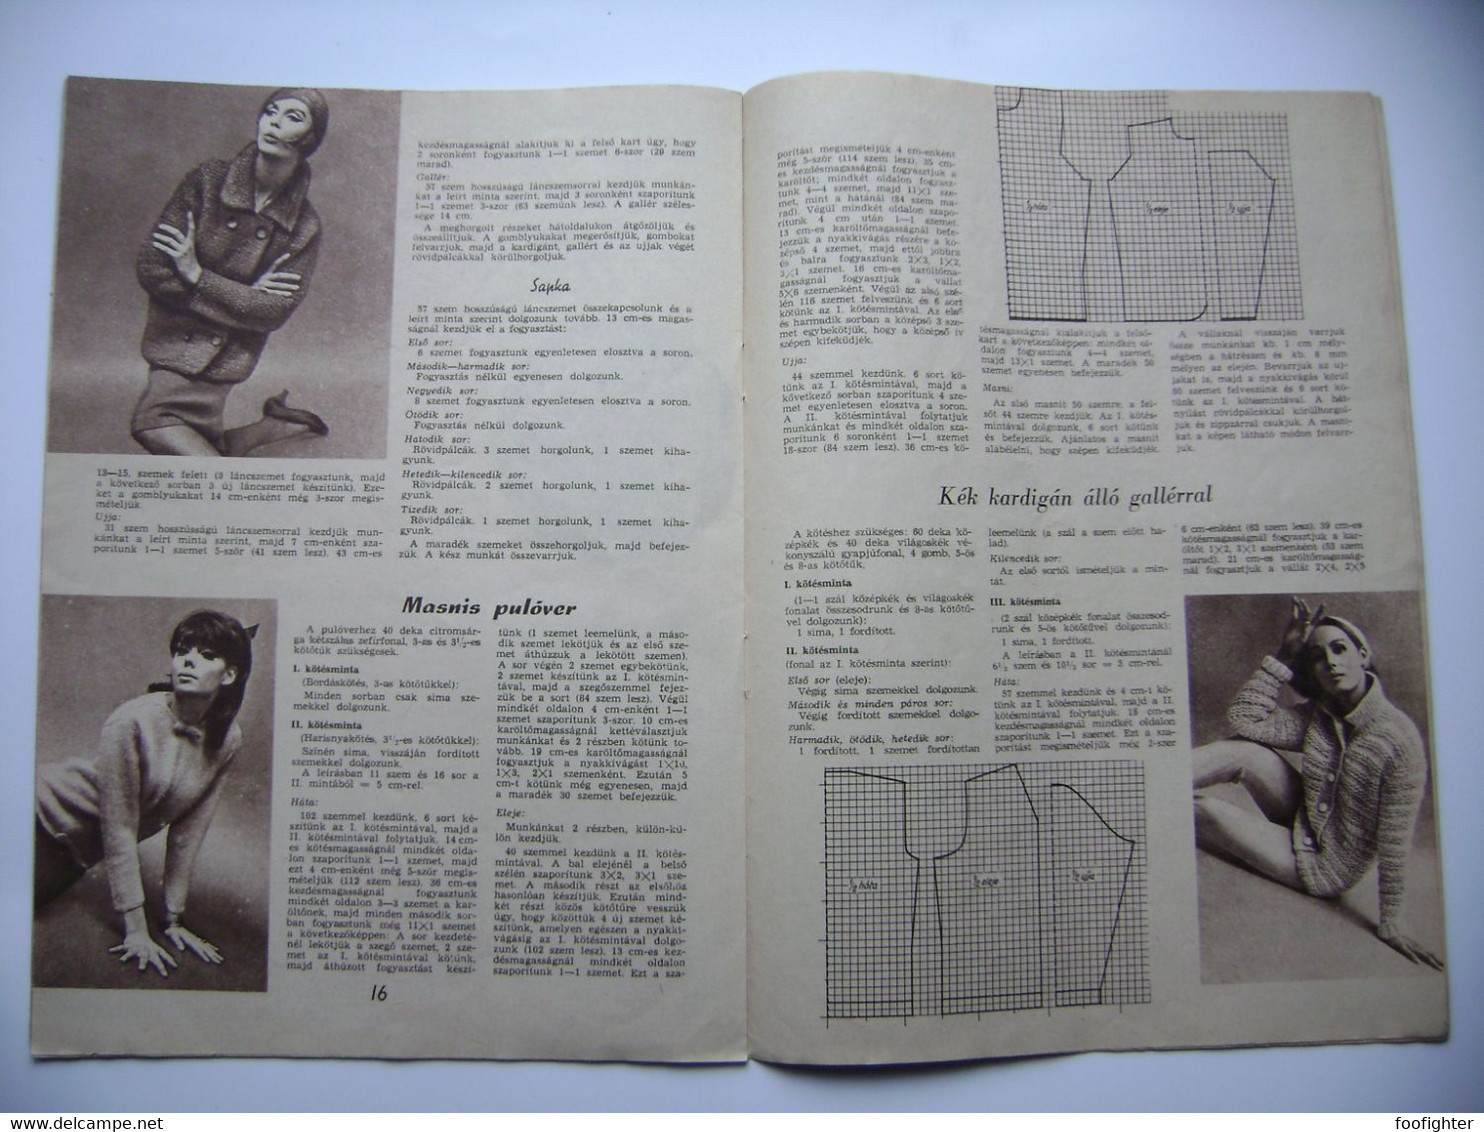 Hungary - FÜRGE UJJAK 1/1966 - Magazine For Handmade, Crochet, Knitting, 23 Pages, Photos, Hungarian Language - Práctico